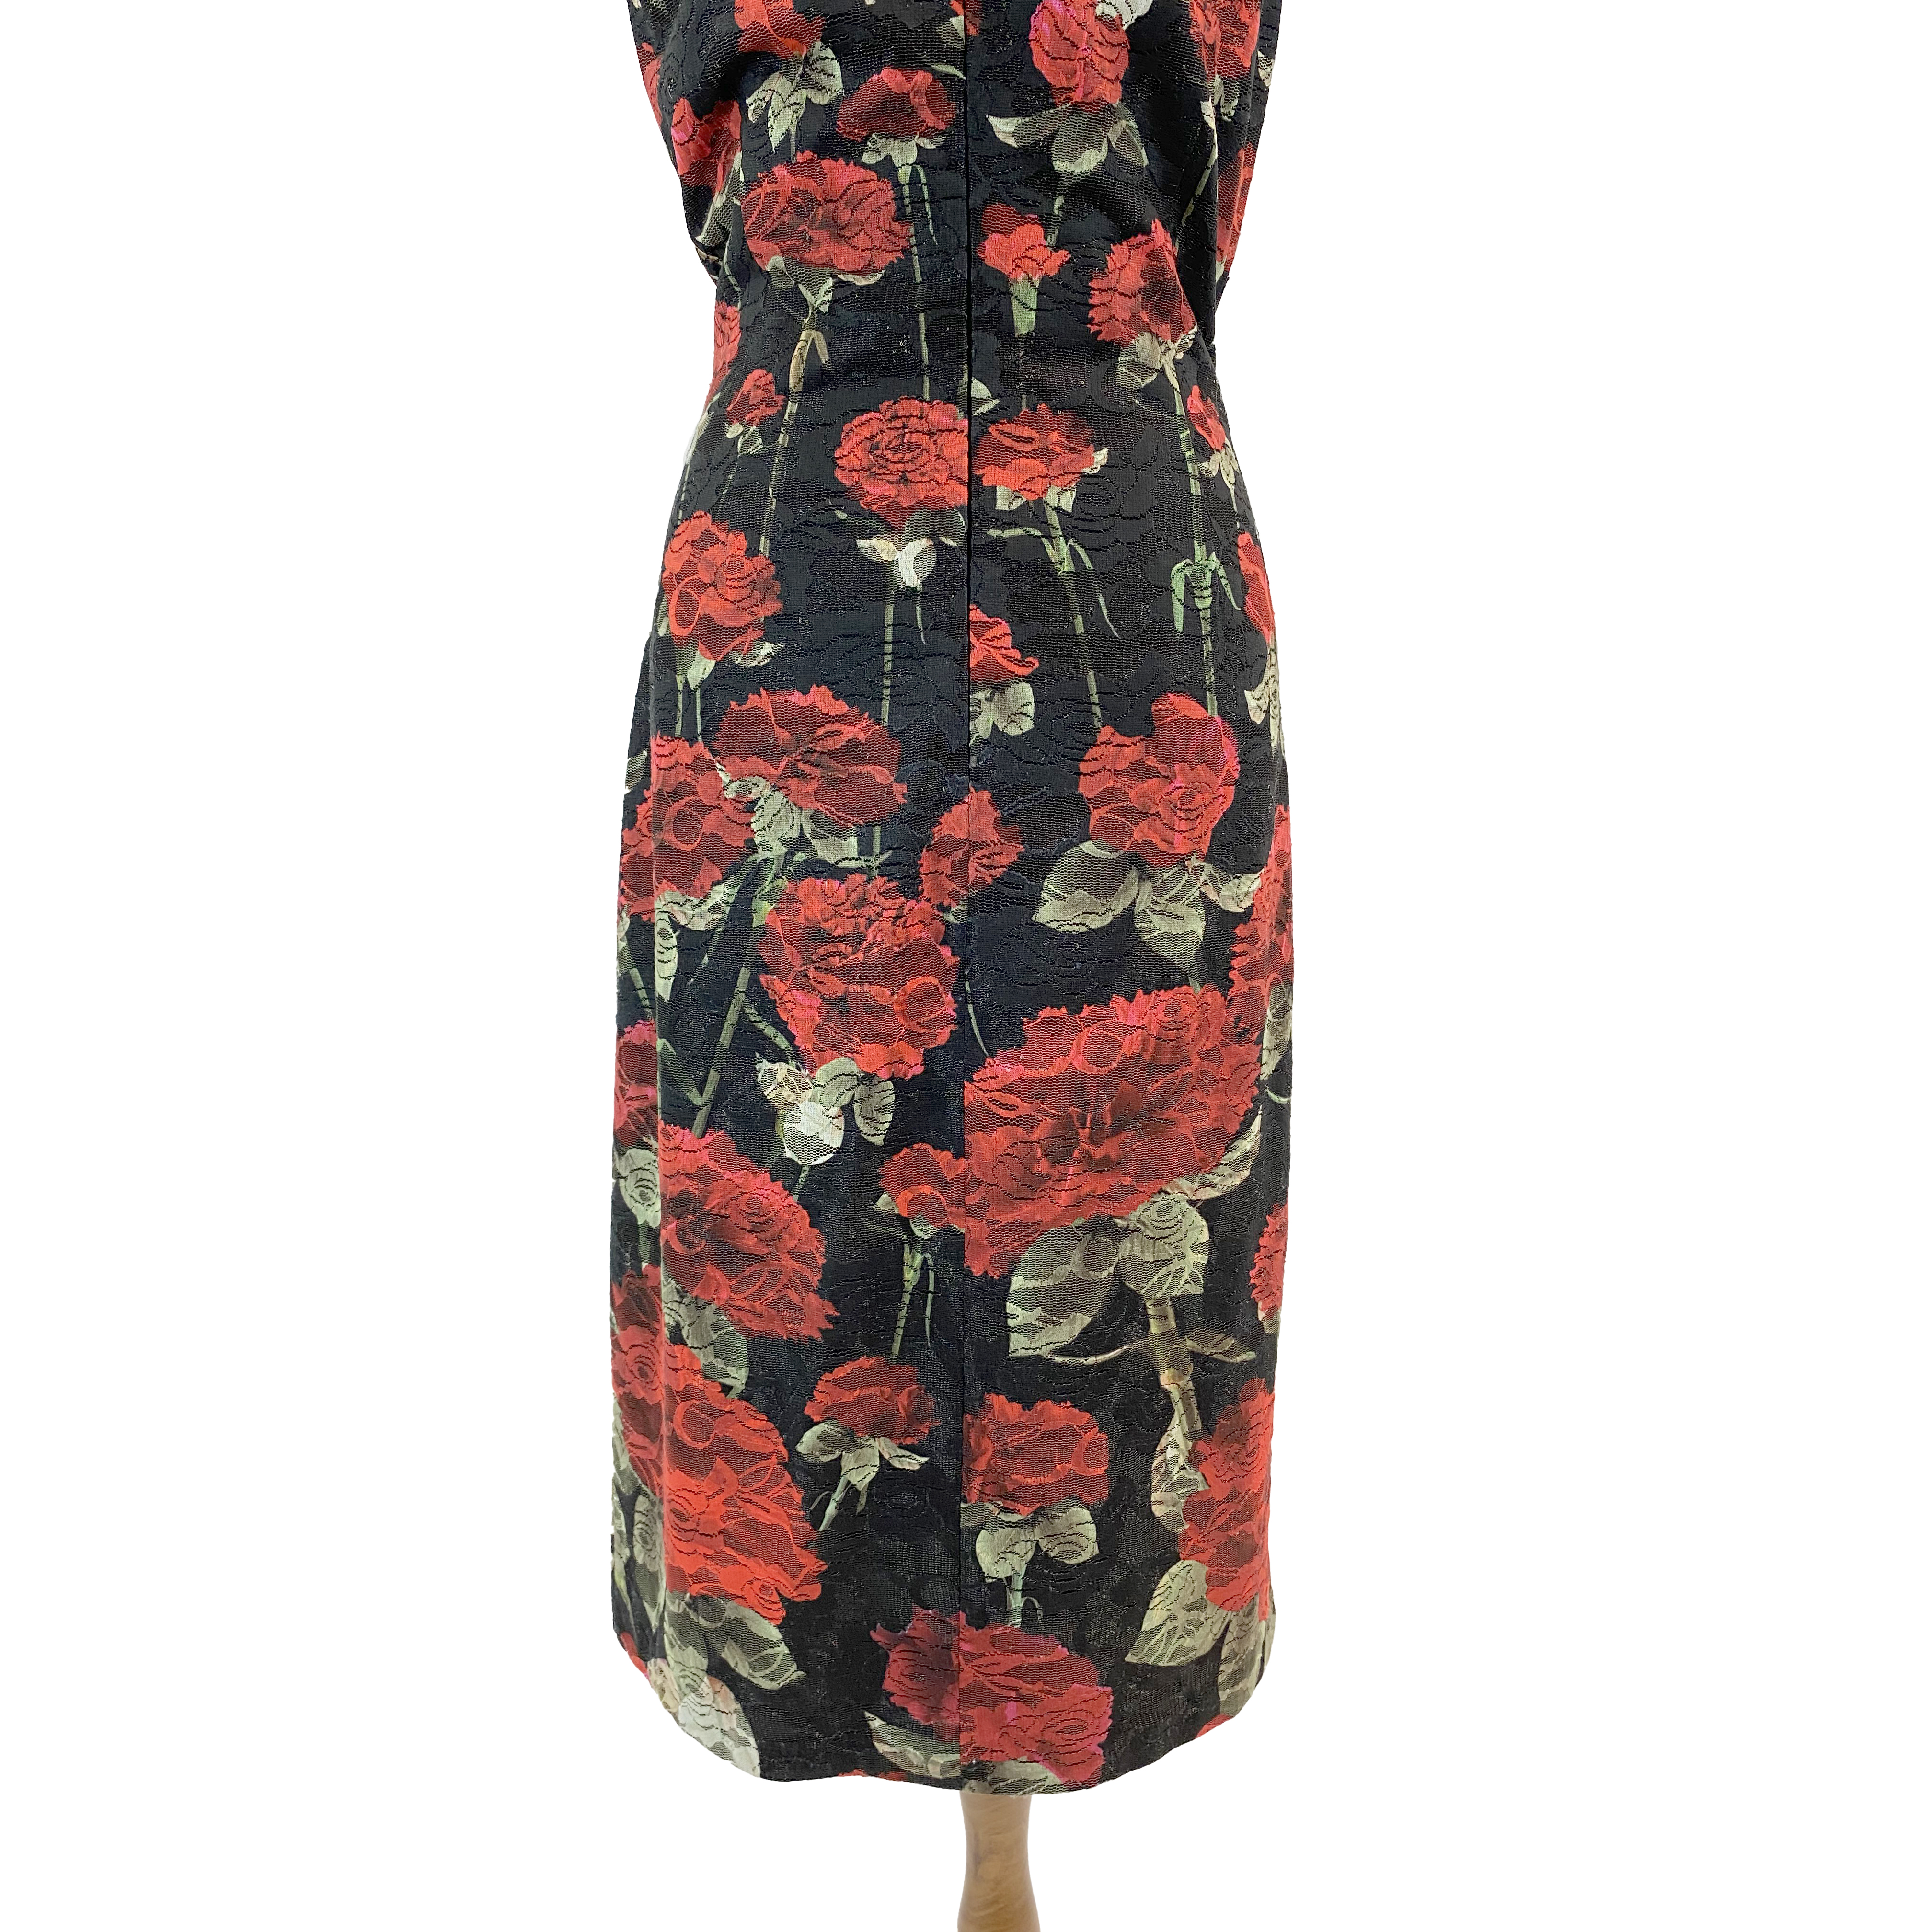 Anthea Crawford Rose Print Lace-effect Dress